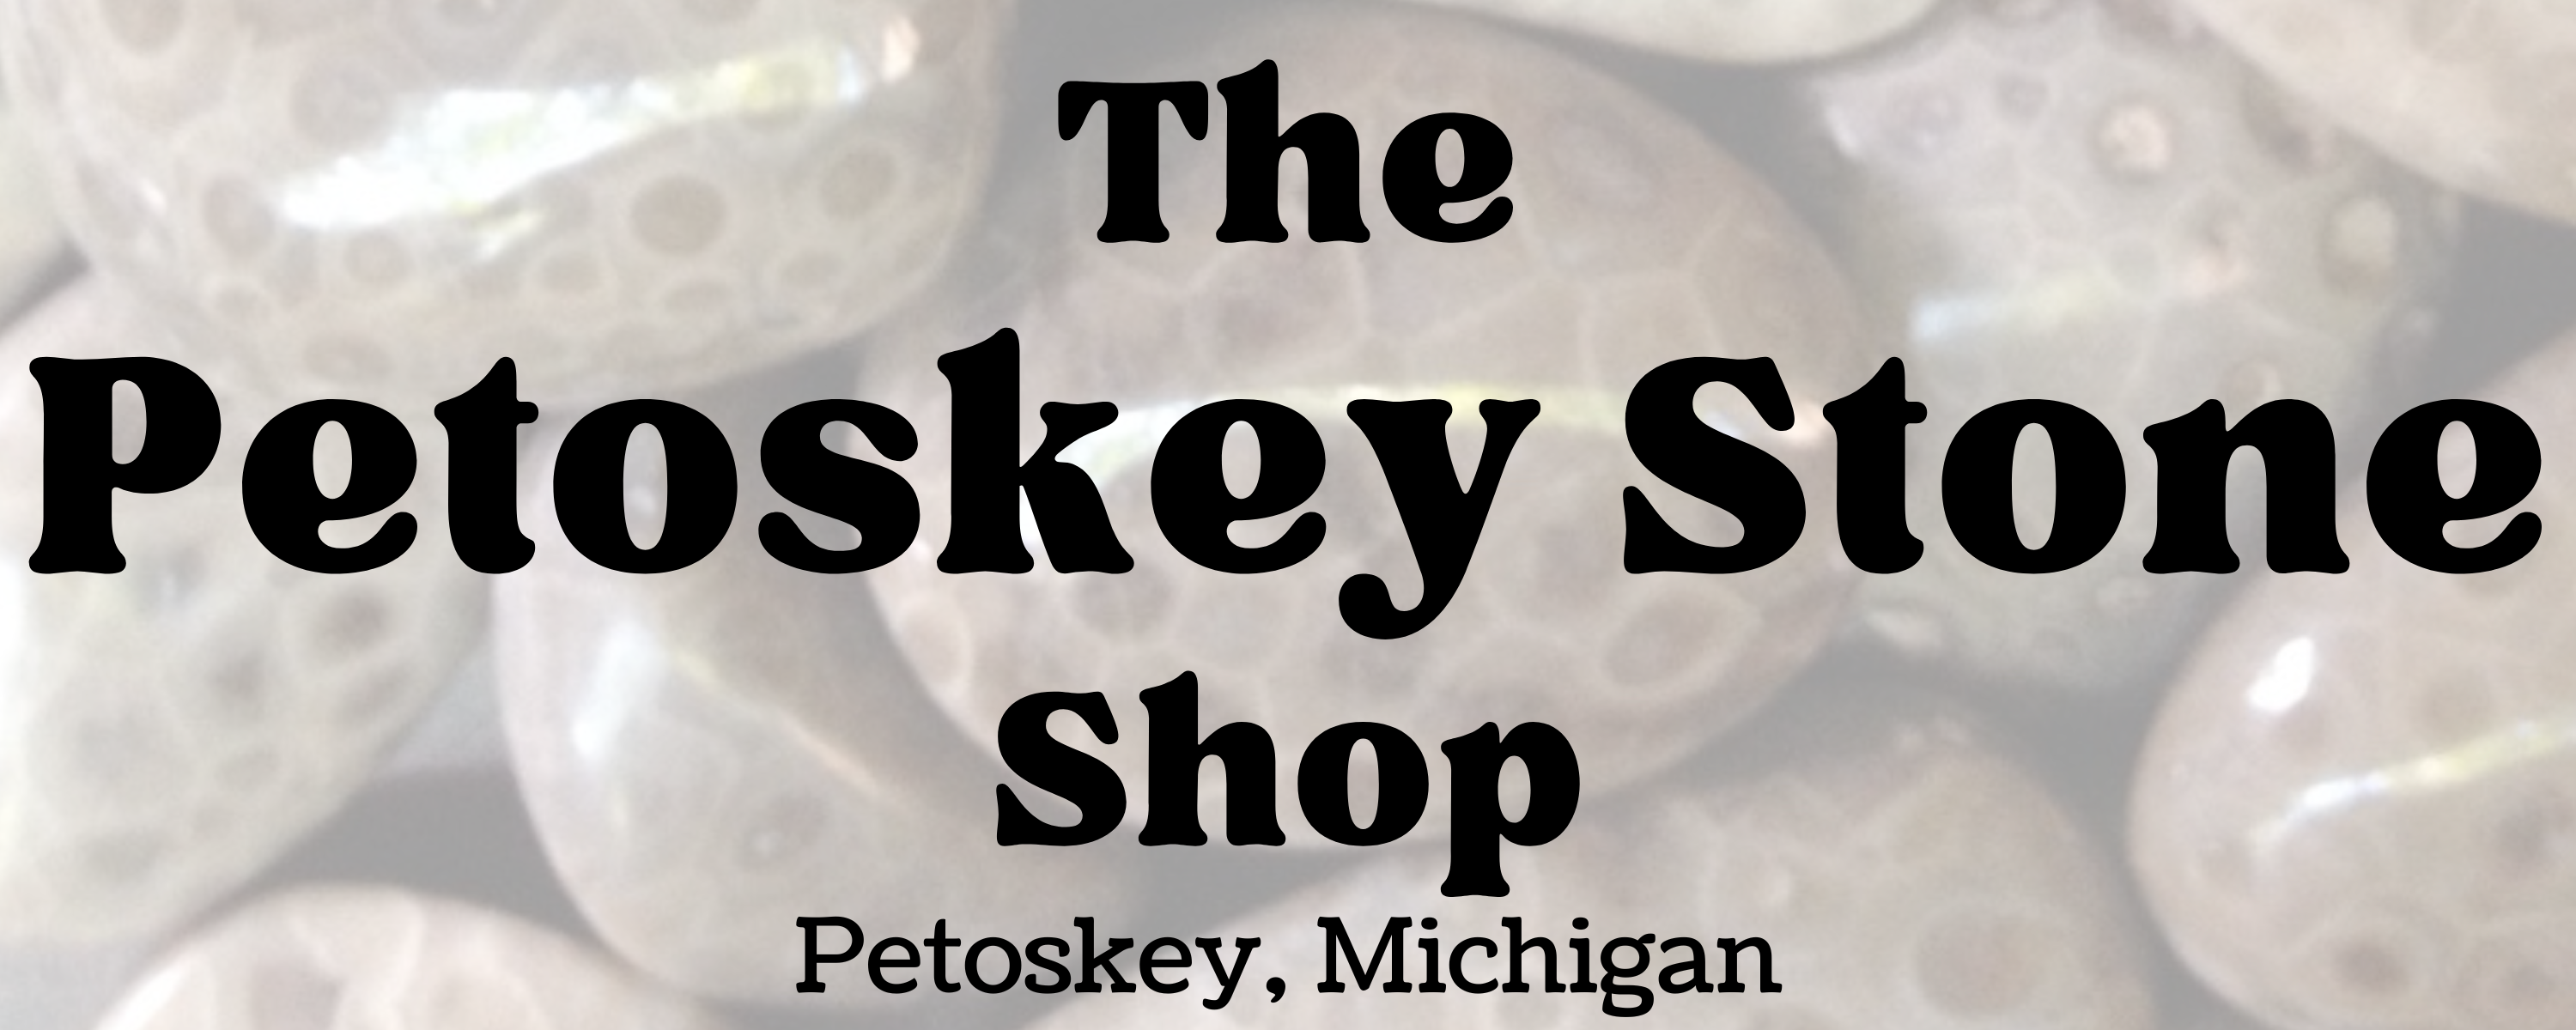 The Petoskey Stone Shop